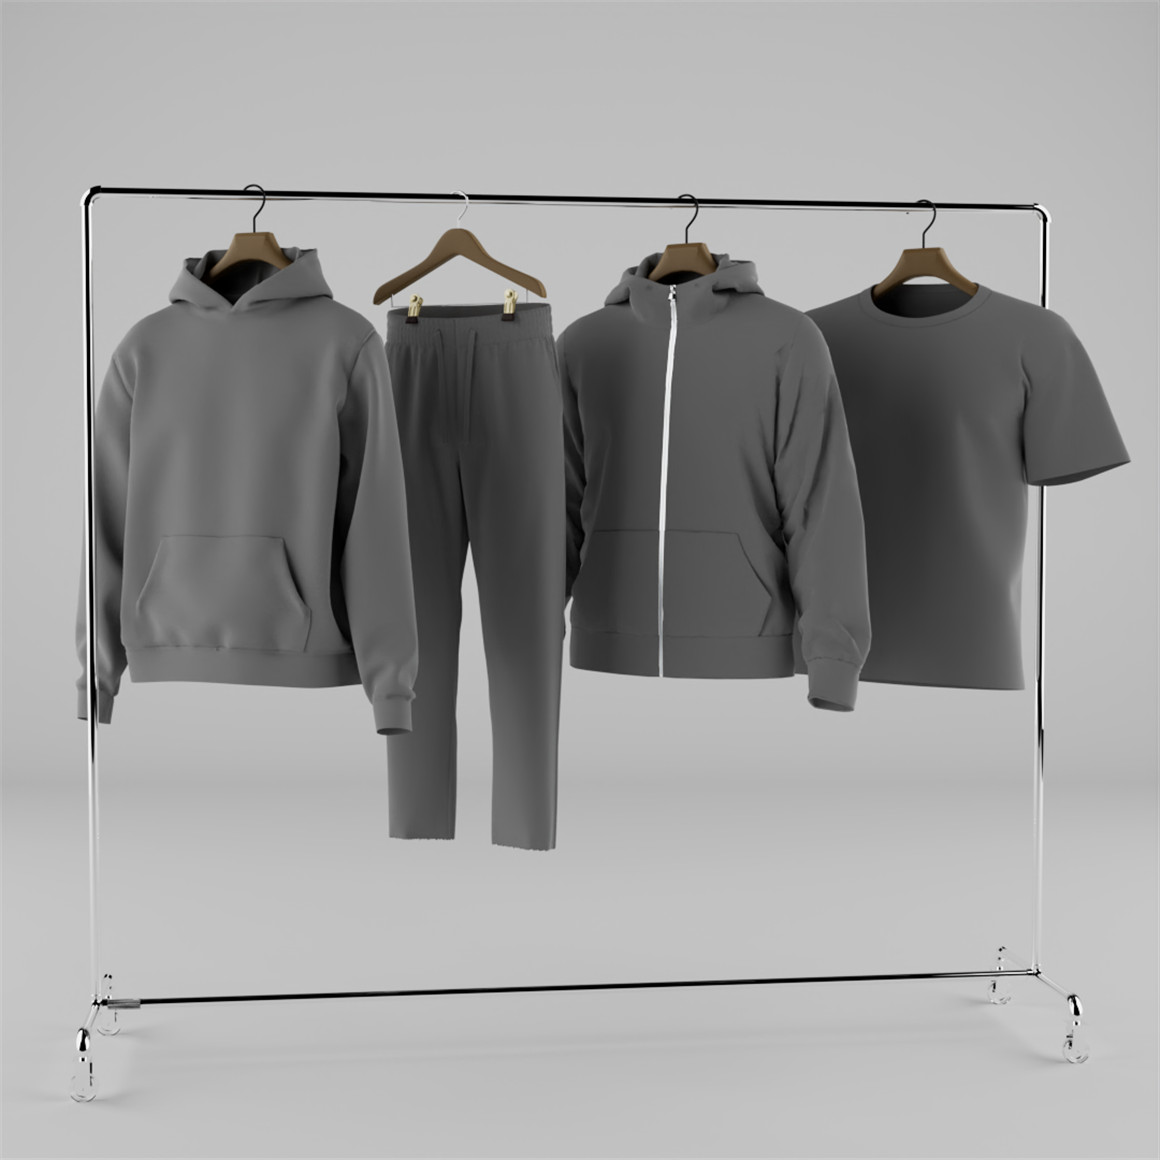 CROMEYARD 逼真高级服饰3D服装展示衣架模型 3D CLOTHING RACK LAYOUT V1 样机素材 第2张